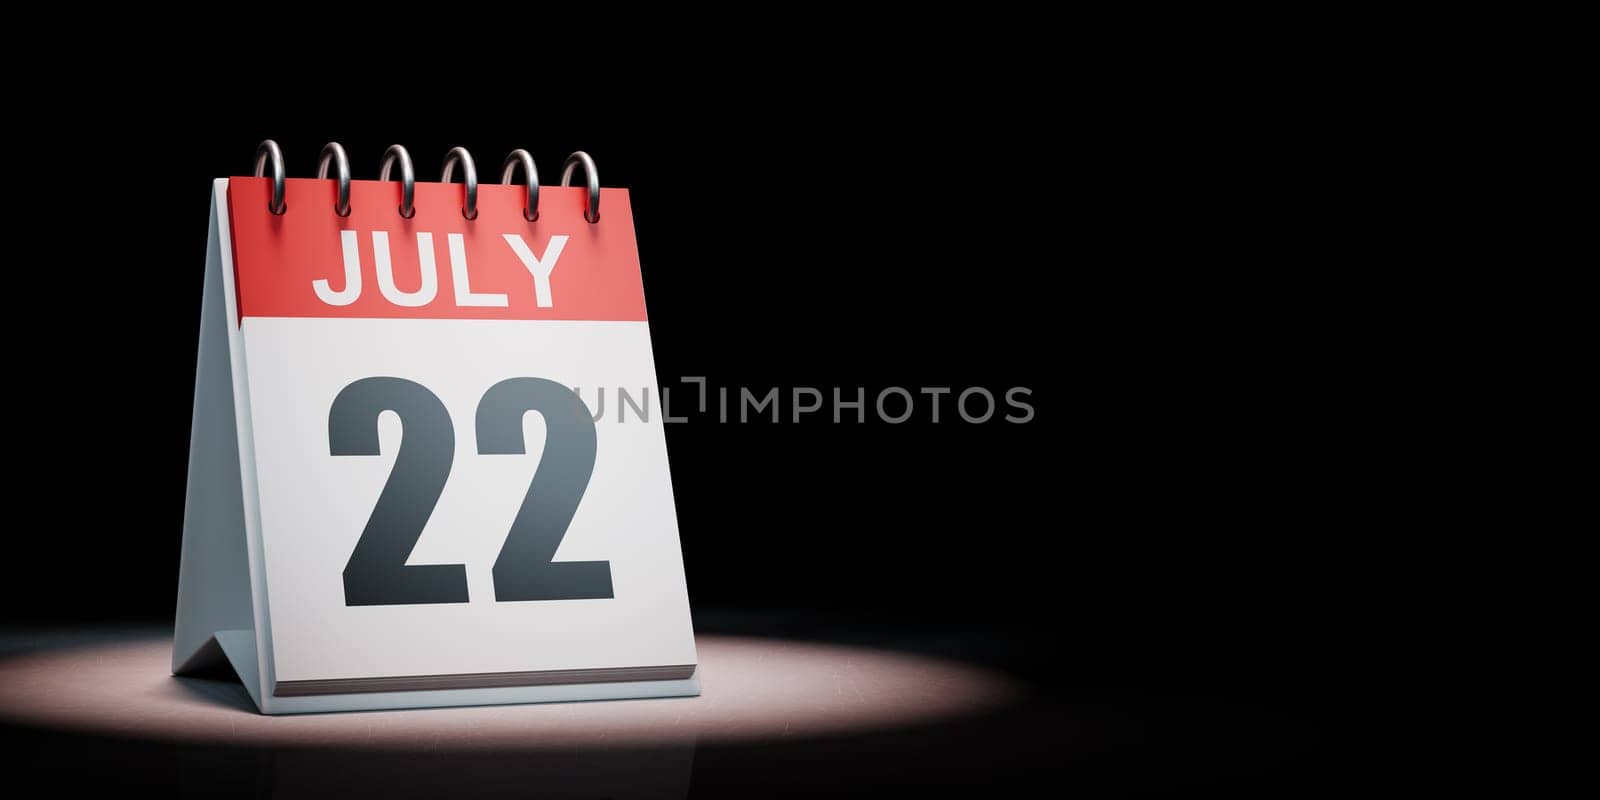 July 22 Calendar Spotlighted on Black Background by make